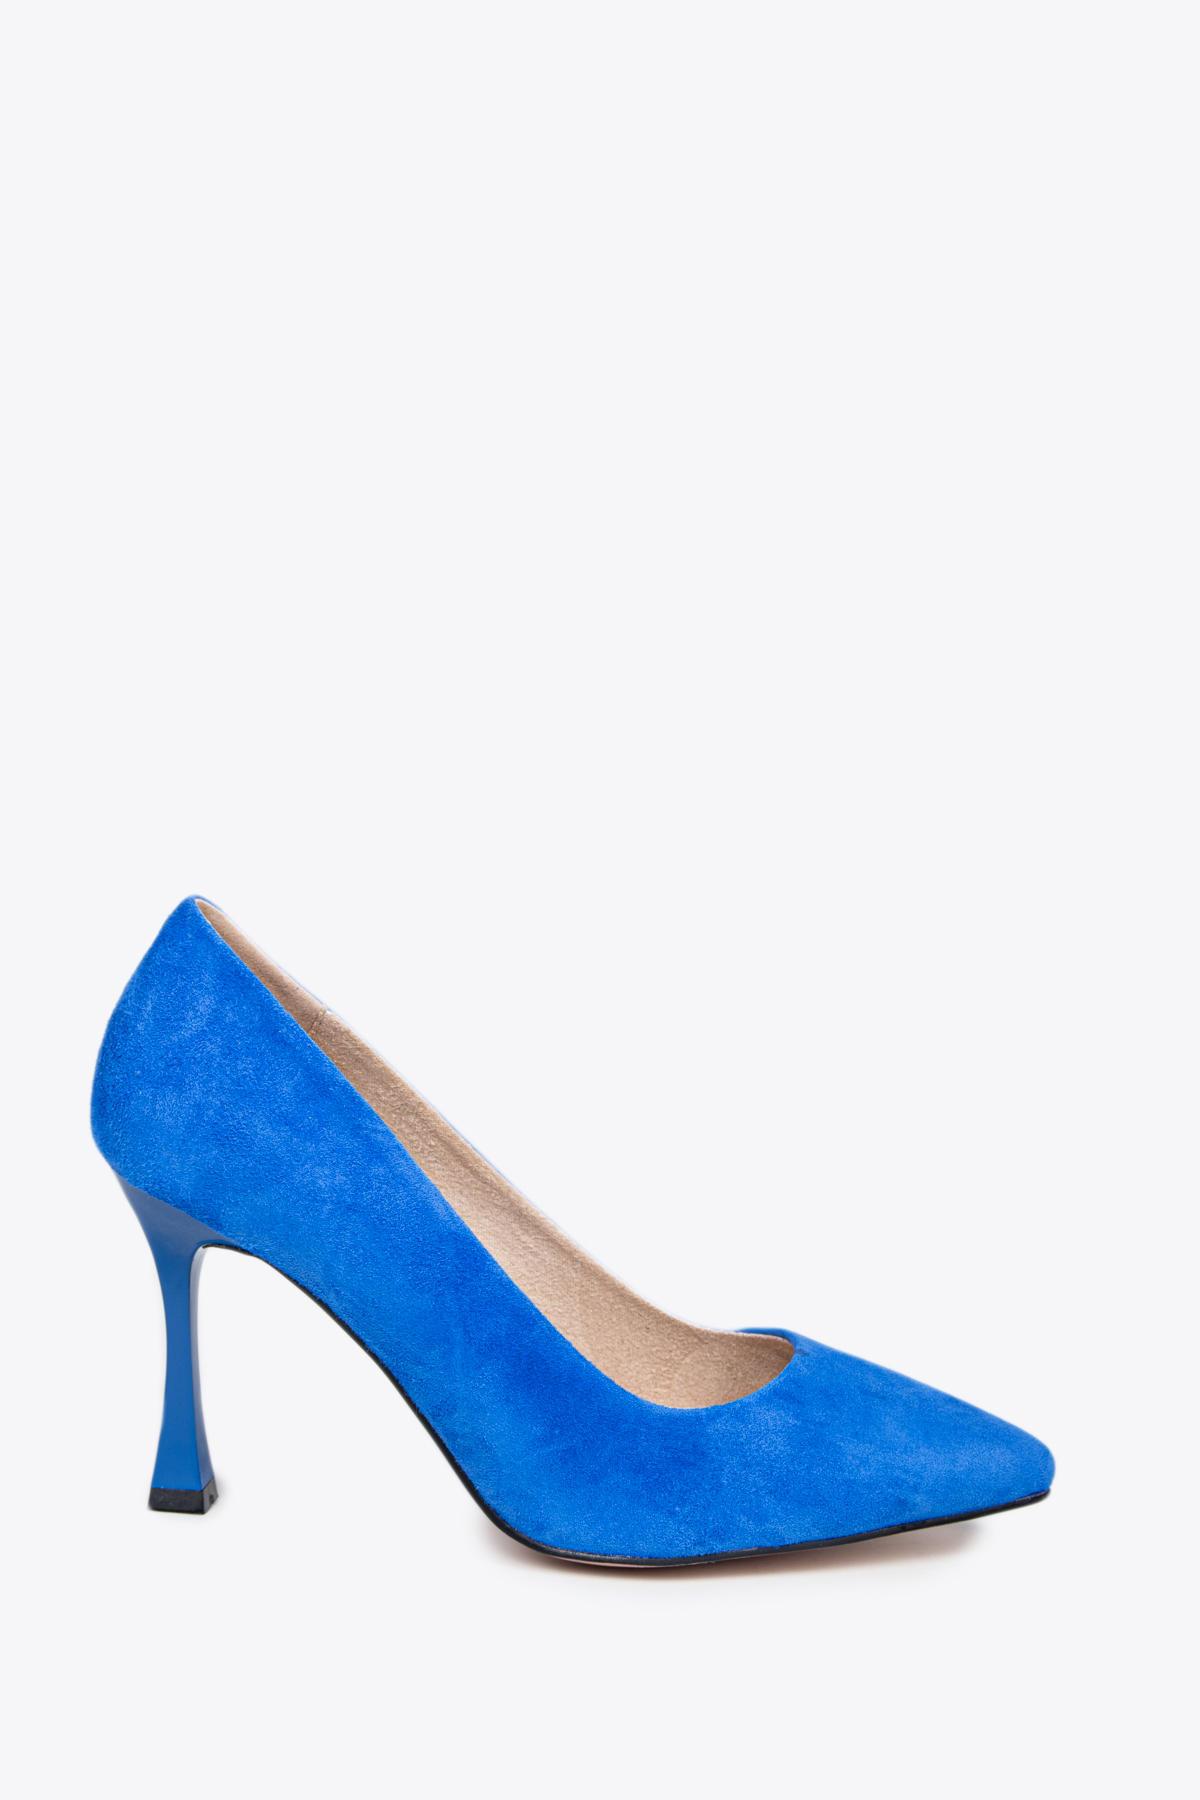 Туфли женские Tofa 603334-5 синие 37 RU